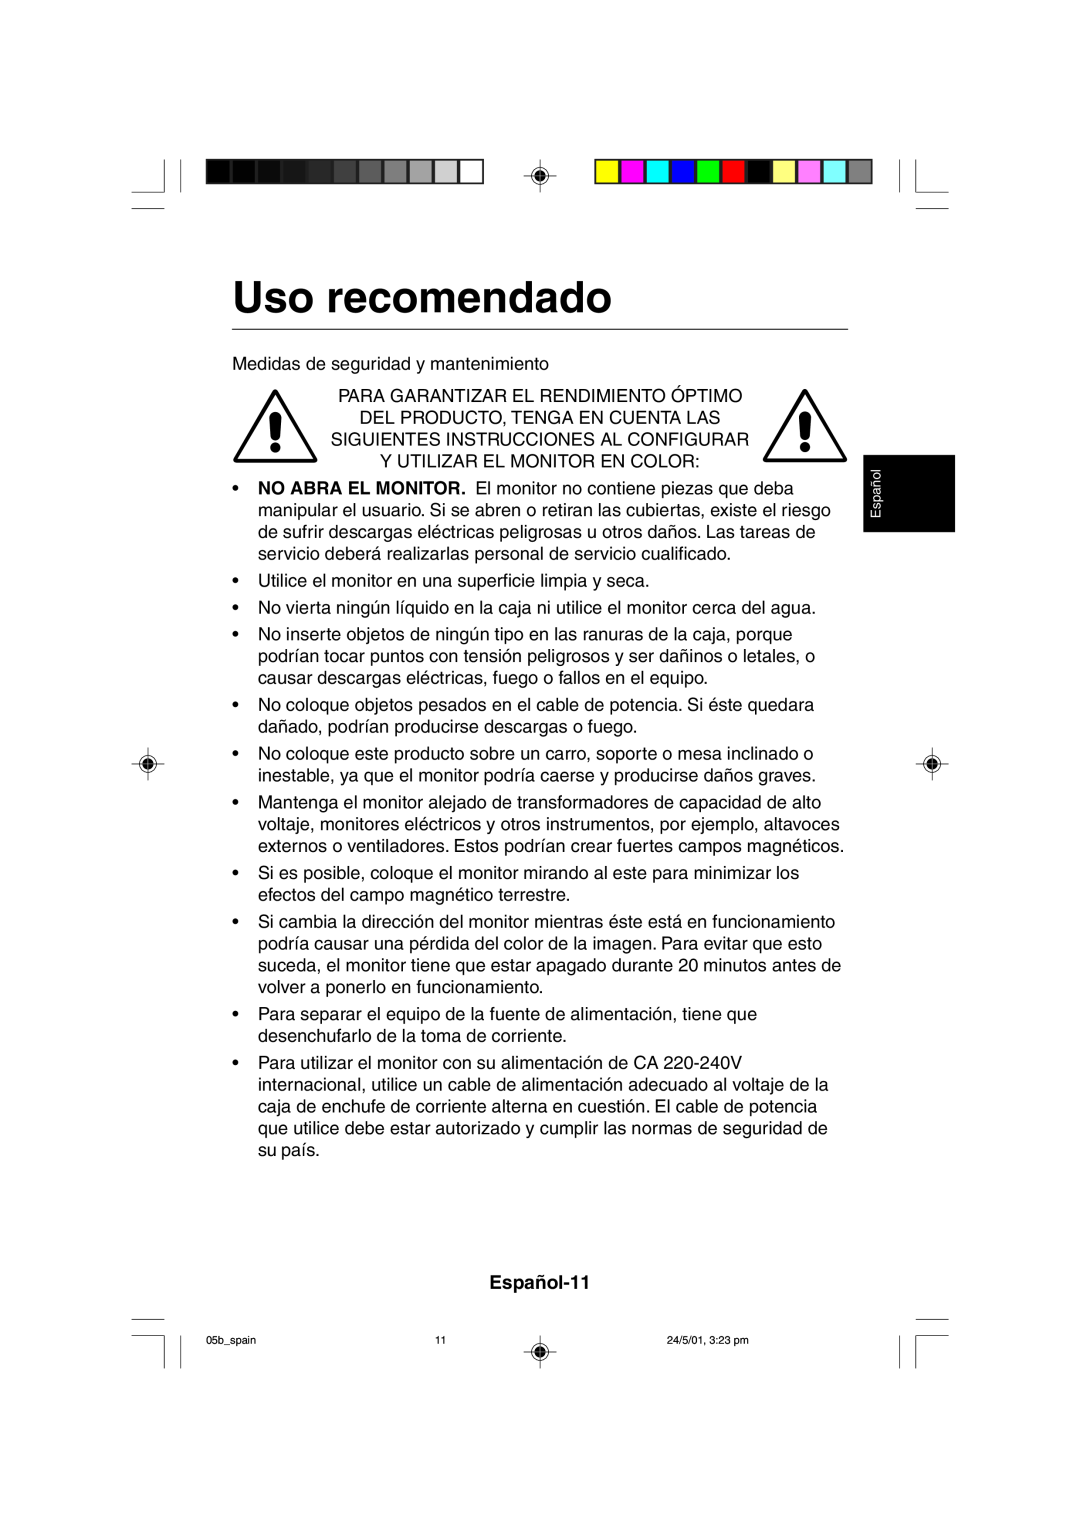 Mitsubishi Electronics M557 user manual Uso recomendado, Español-11 